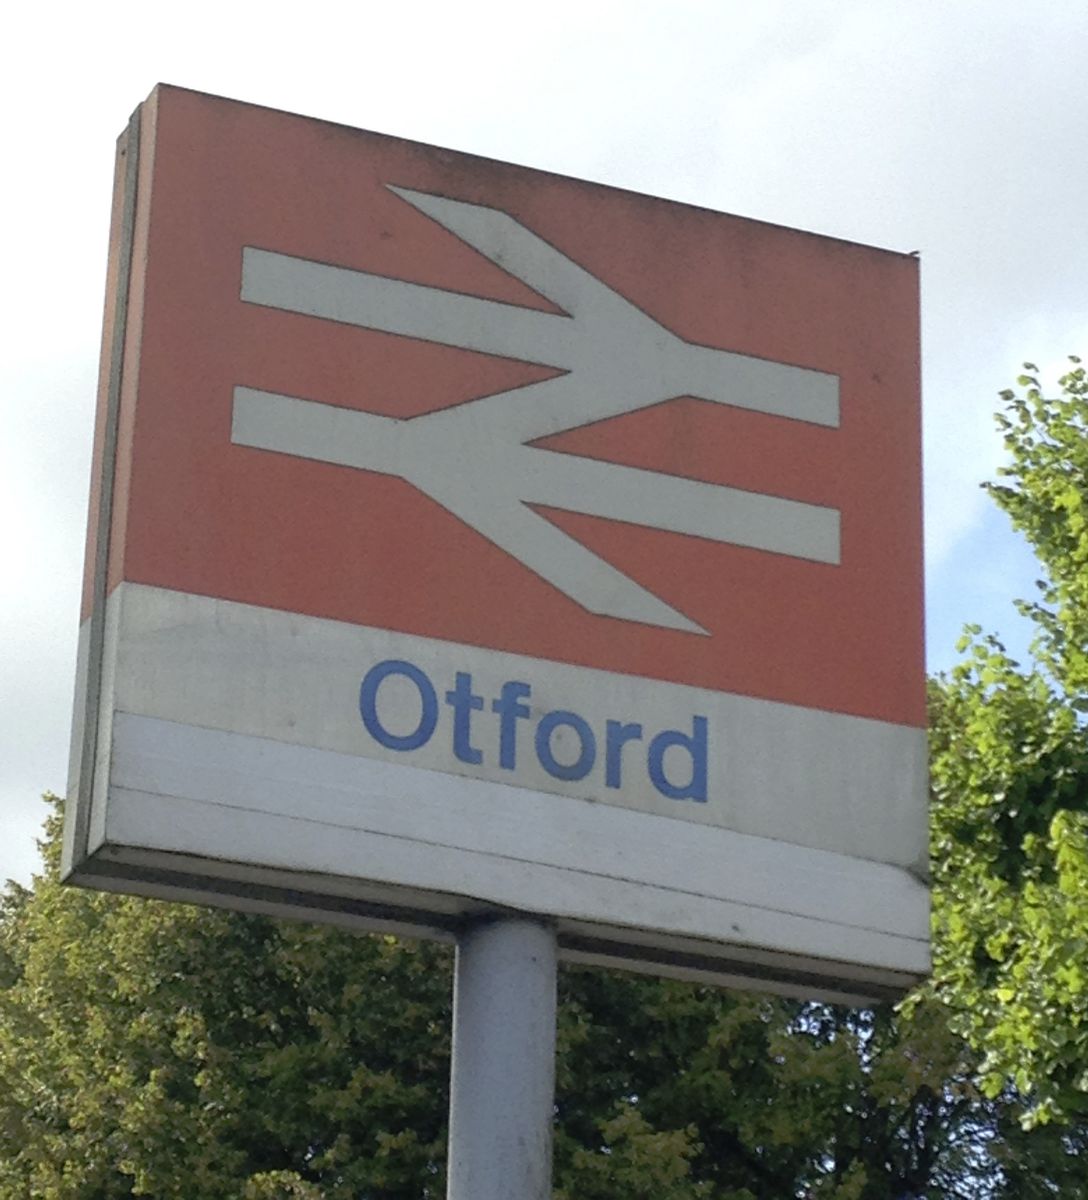 Standard British UK Rail sign outside my home station.